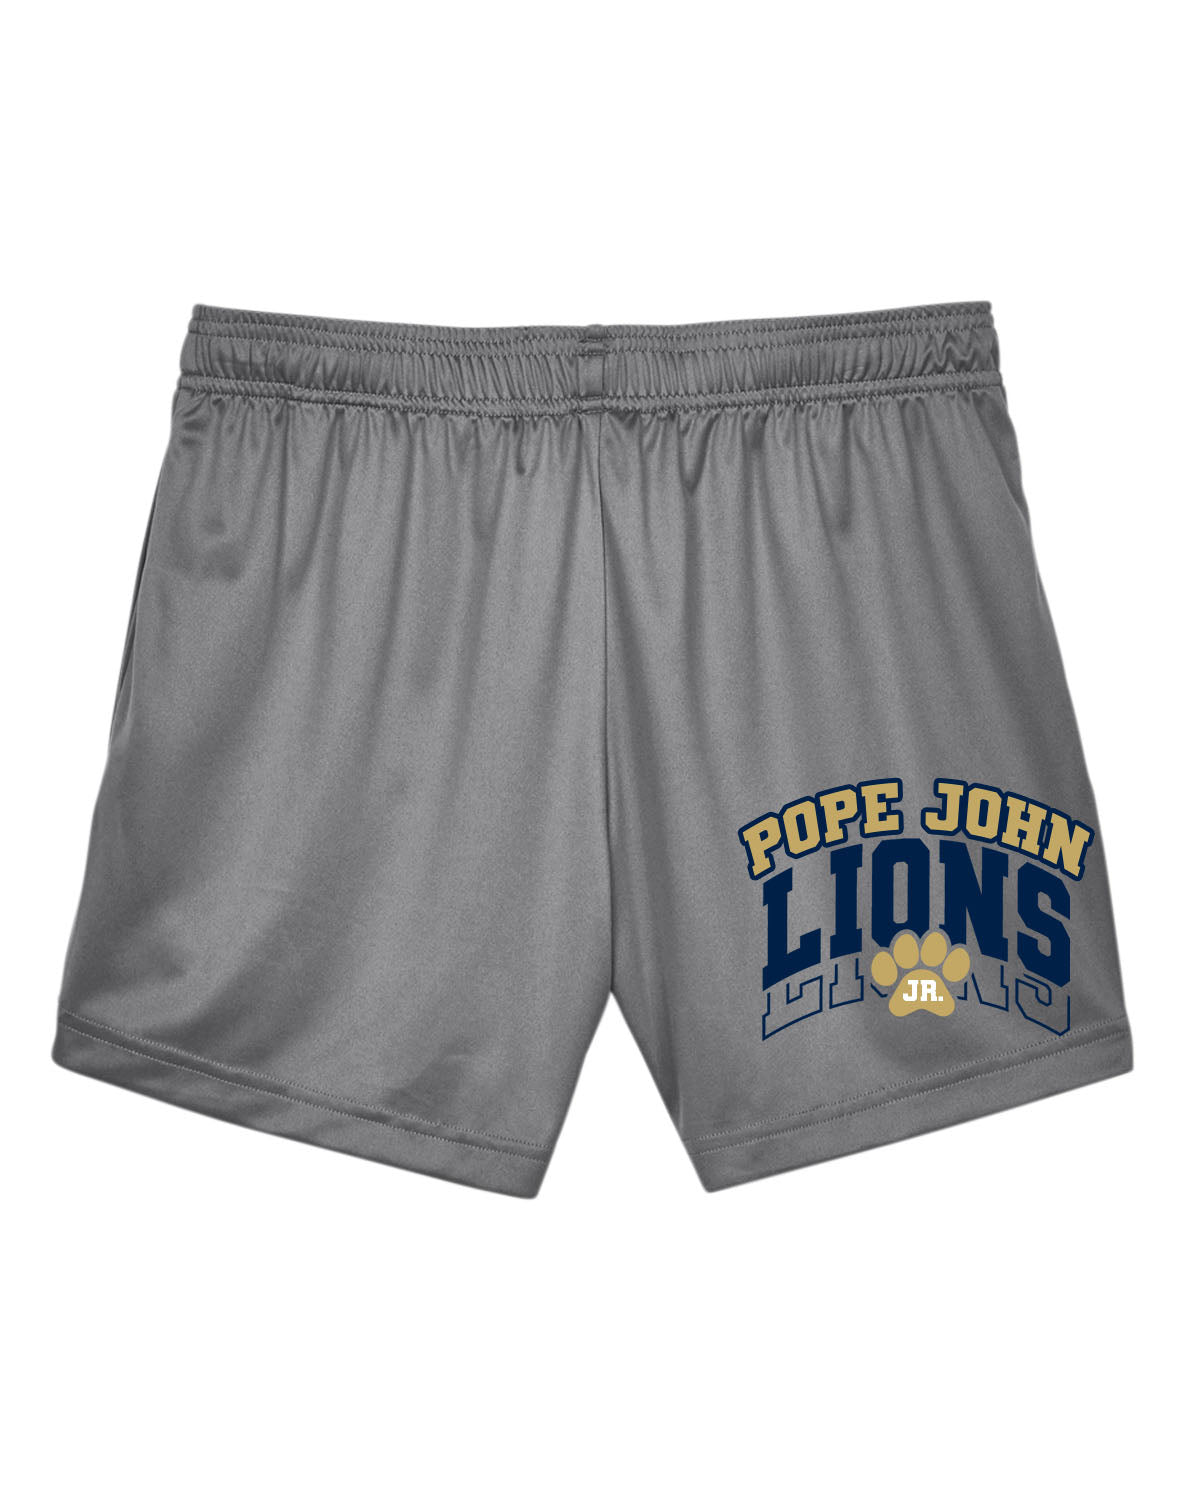 Lions Cheer Ladies Performance Design 1 Shorts